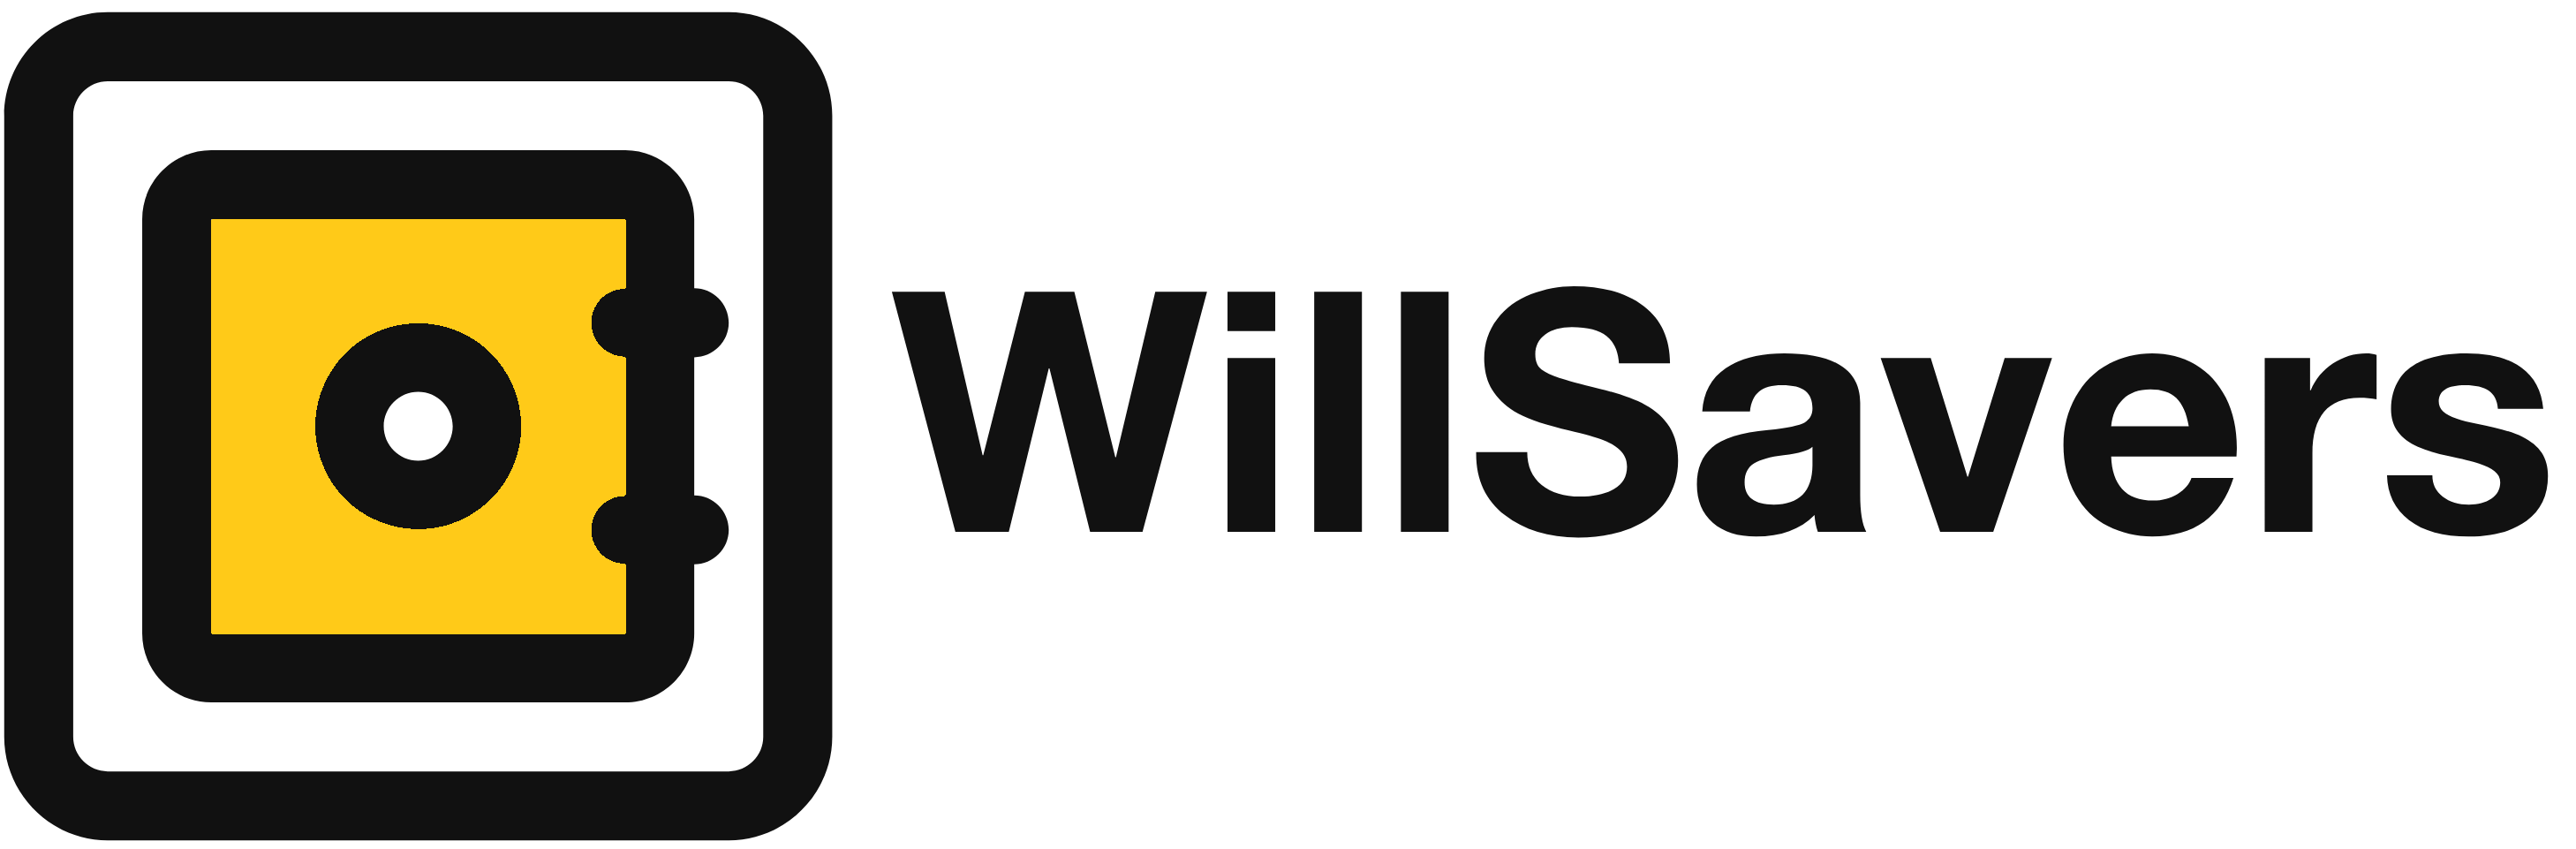 Will Savers Logo